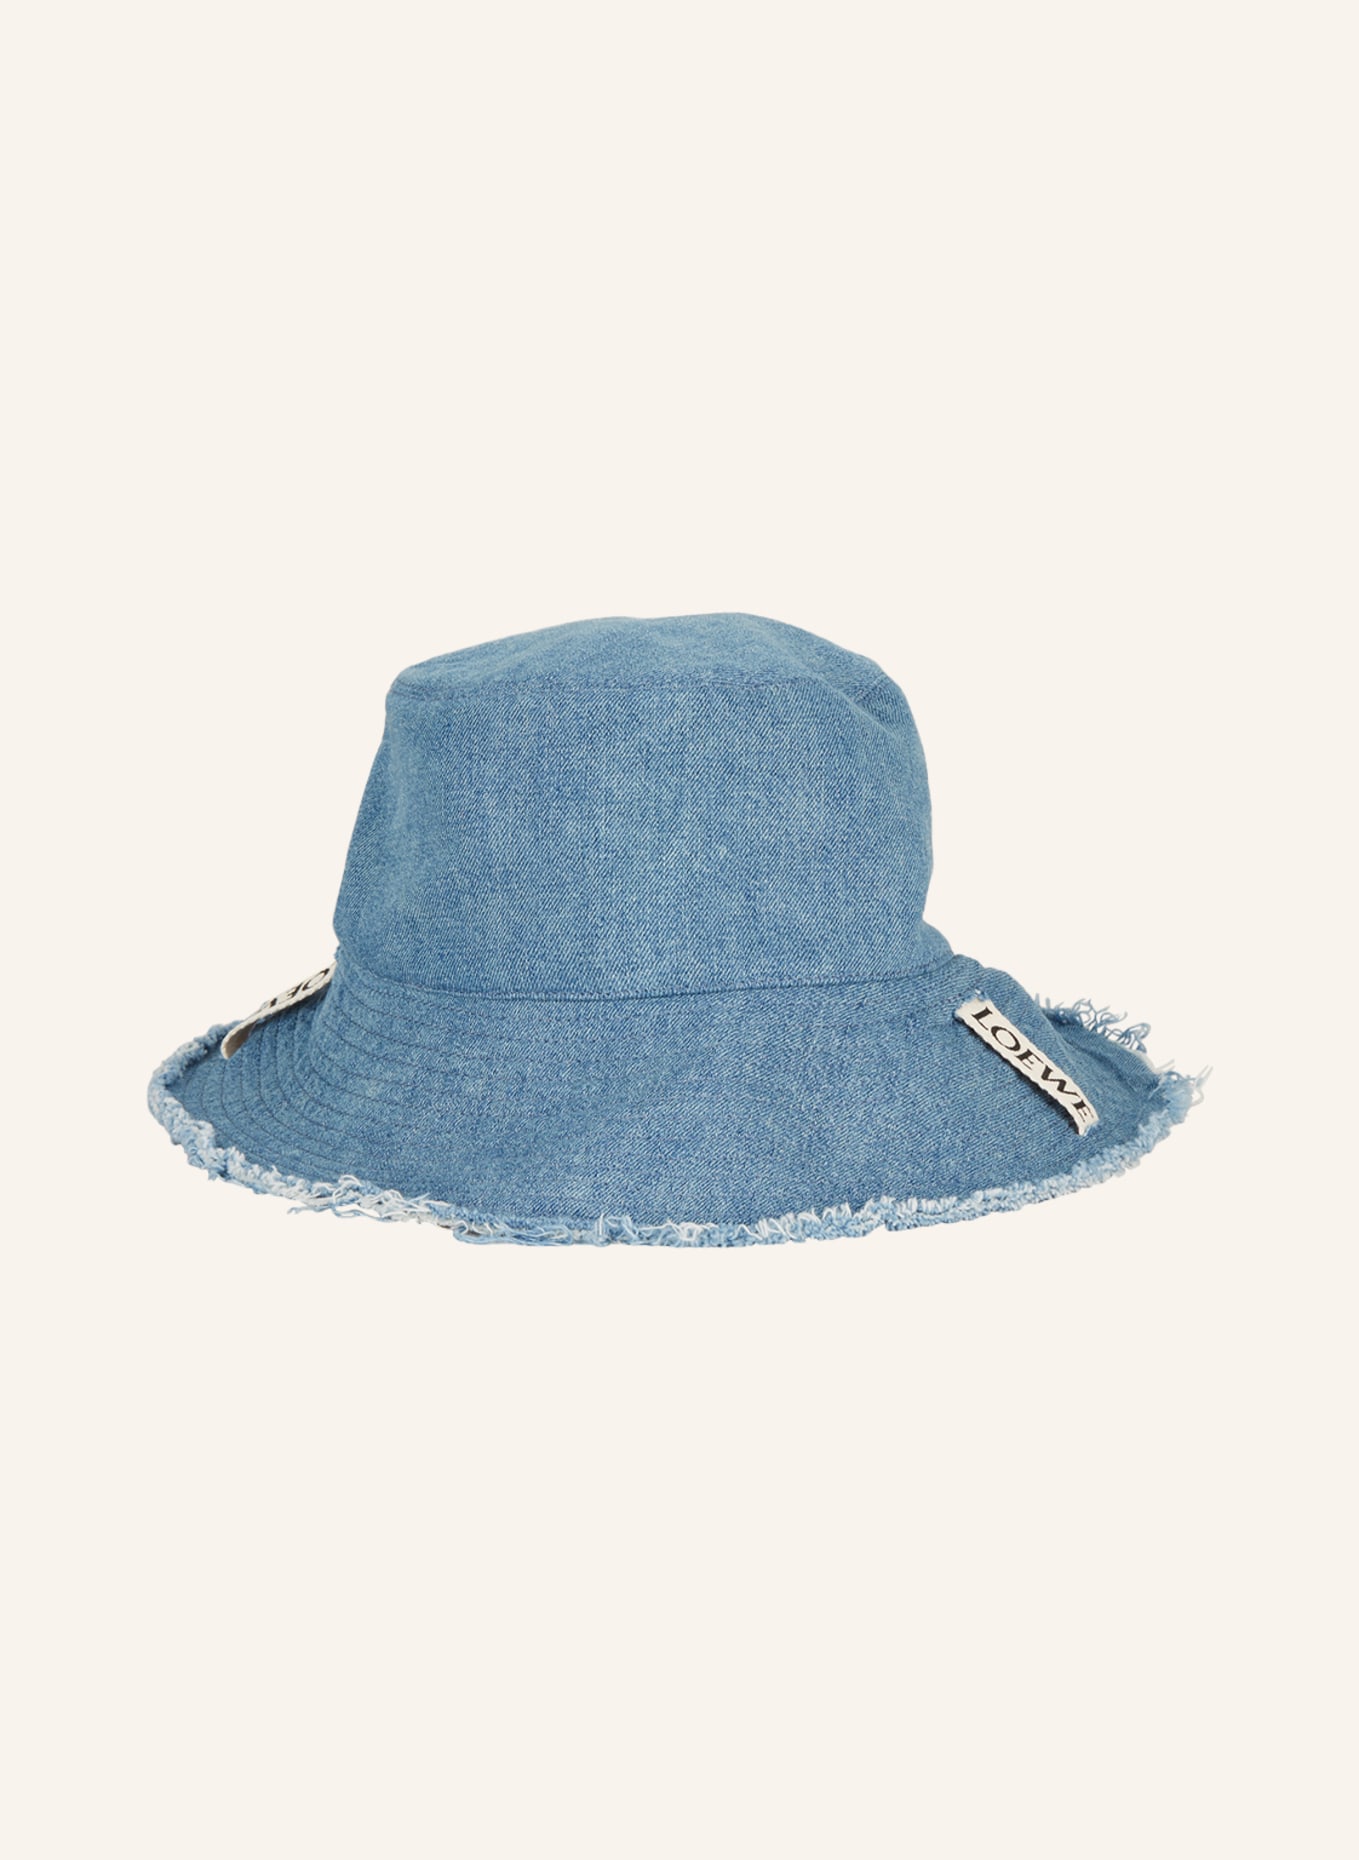 Paulas Ibiza Frayed Denim Bucket Hat in Blue - Loewe